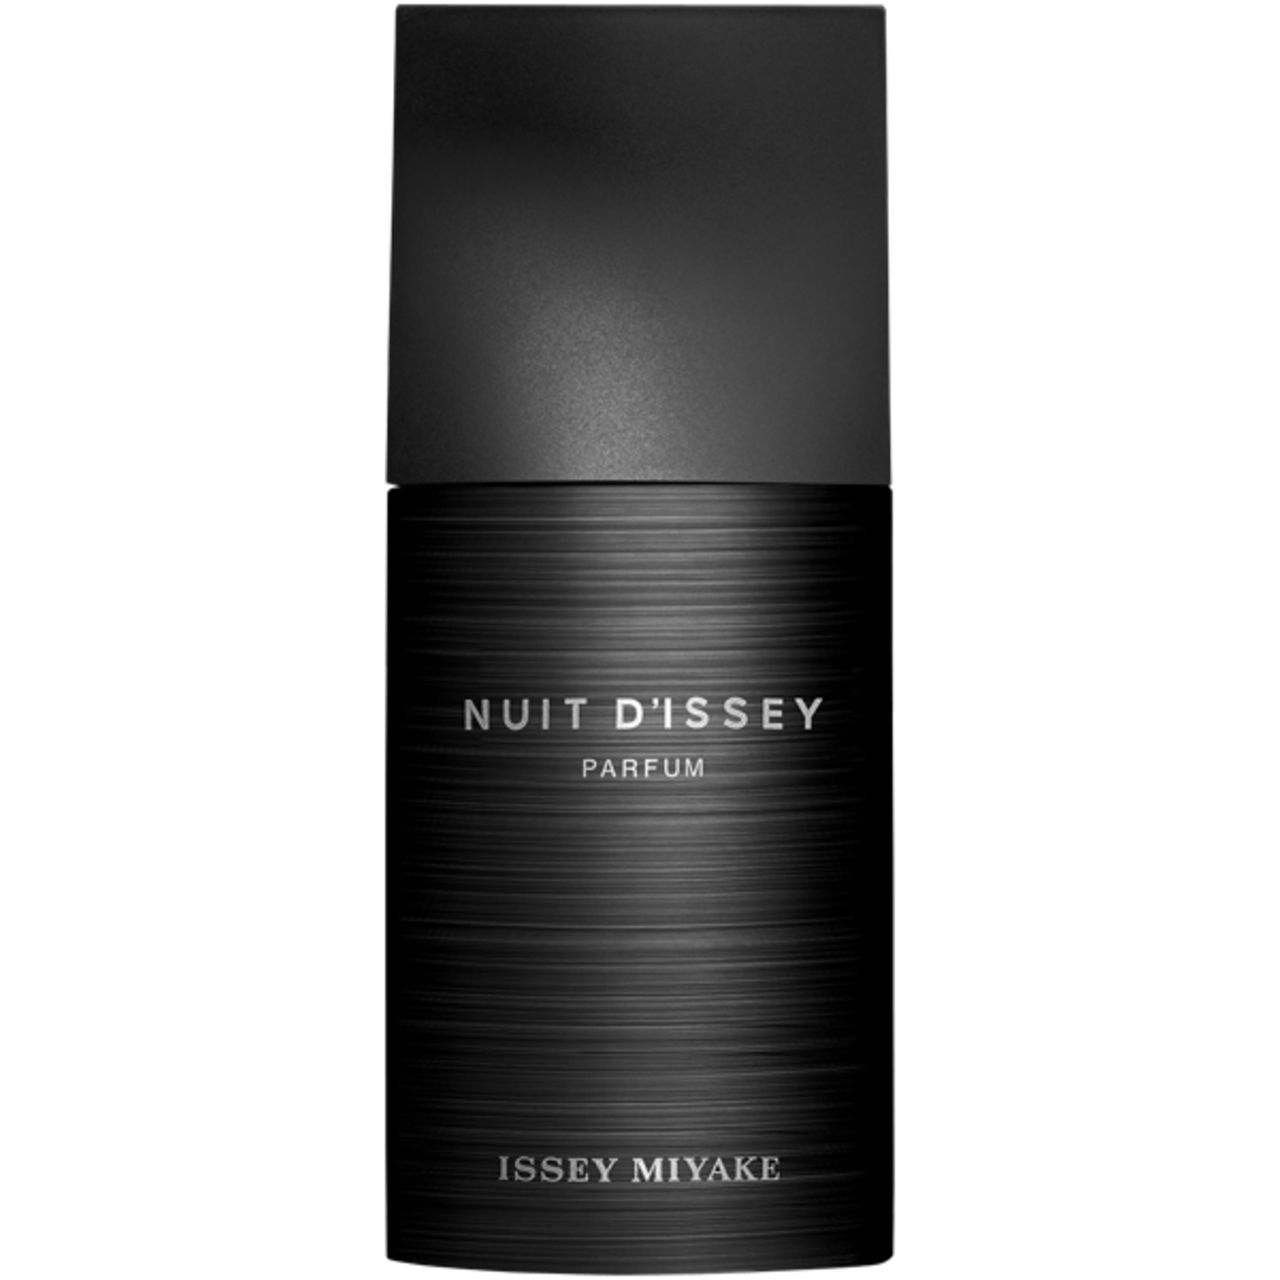 Issey Miyake, Nuit d'Issey Parfum